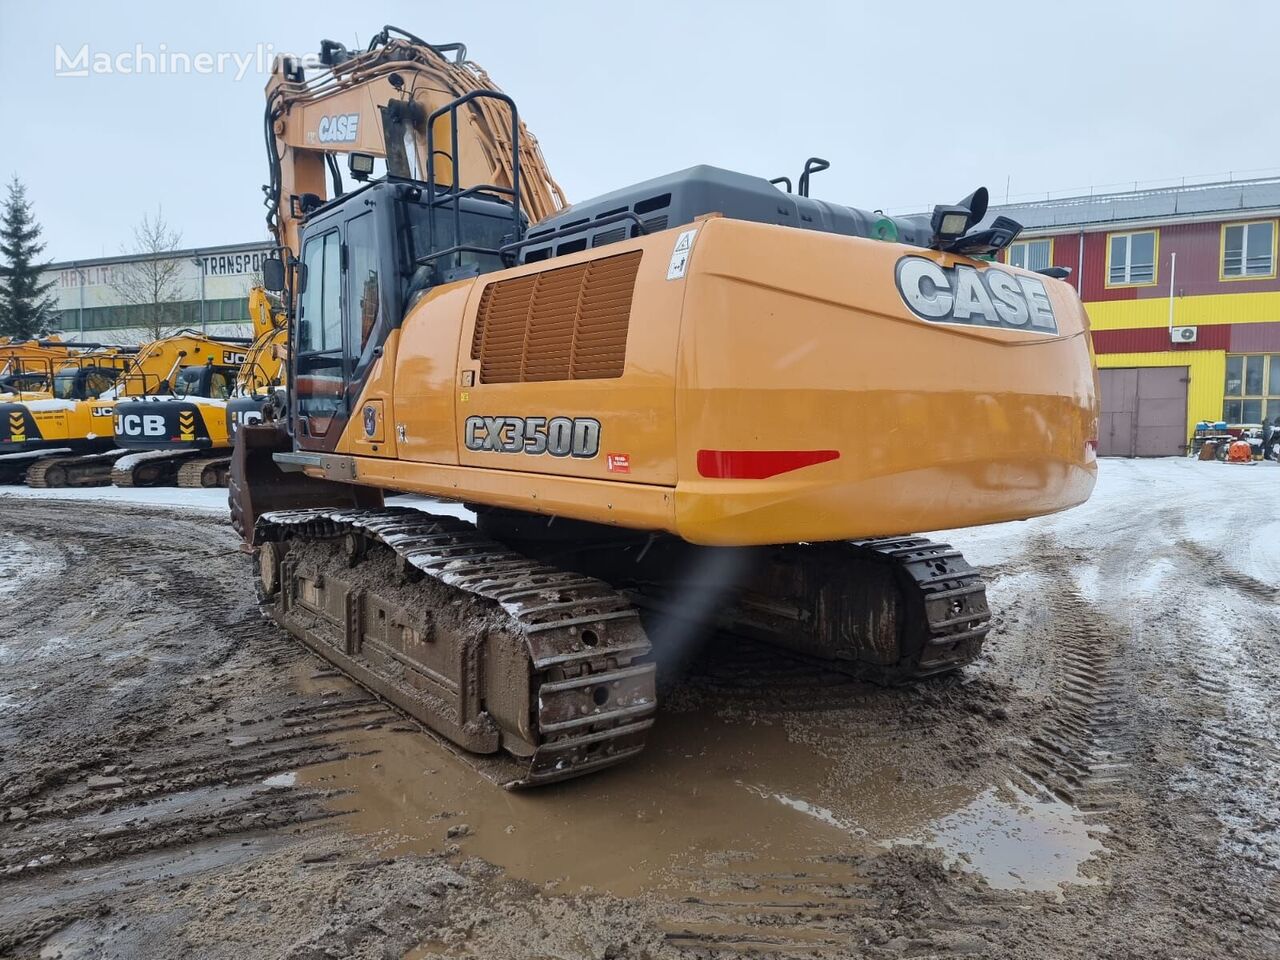 Case CX350D tracked excavator